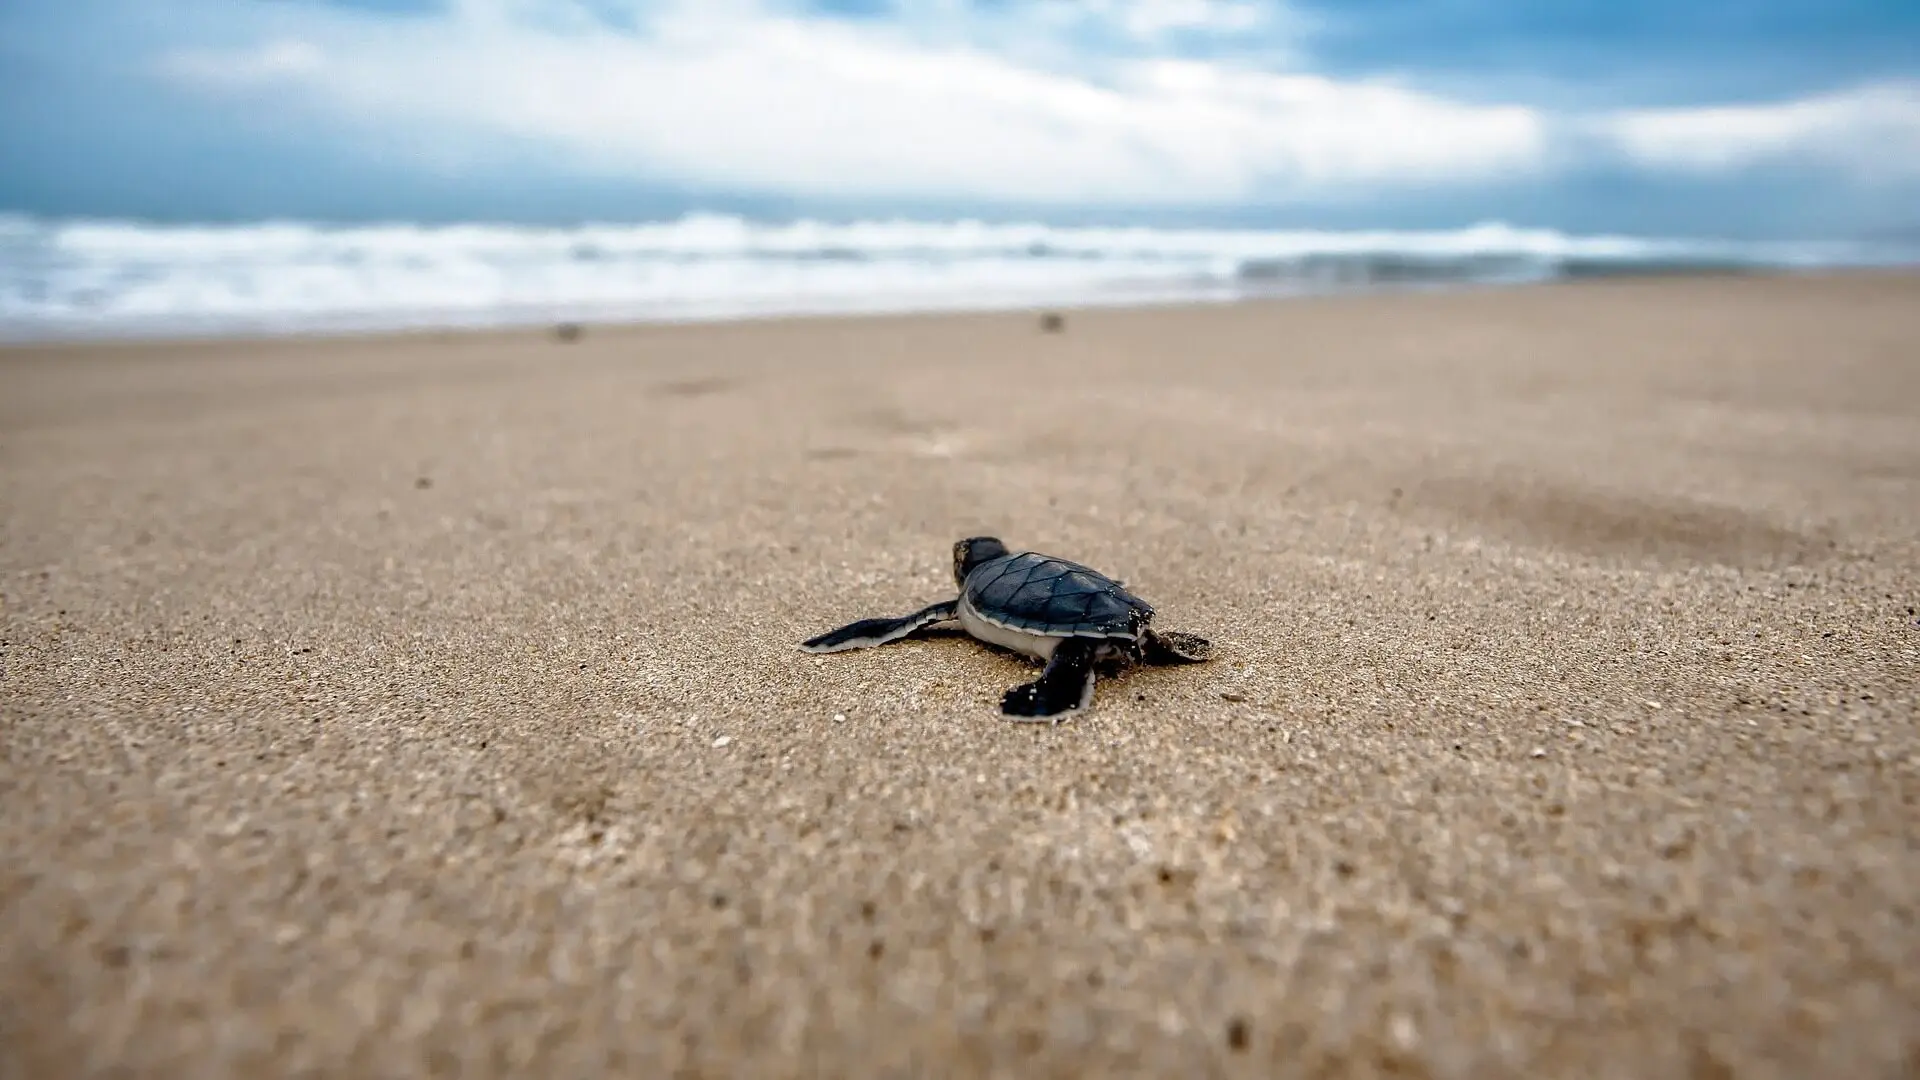 A baby sea turtle walking on a sandy beach